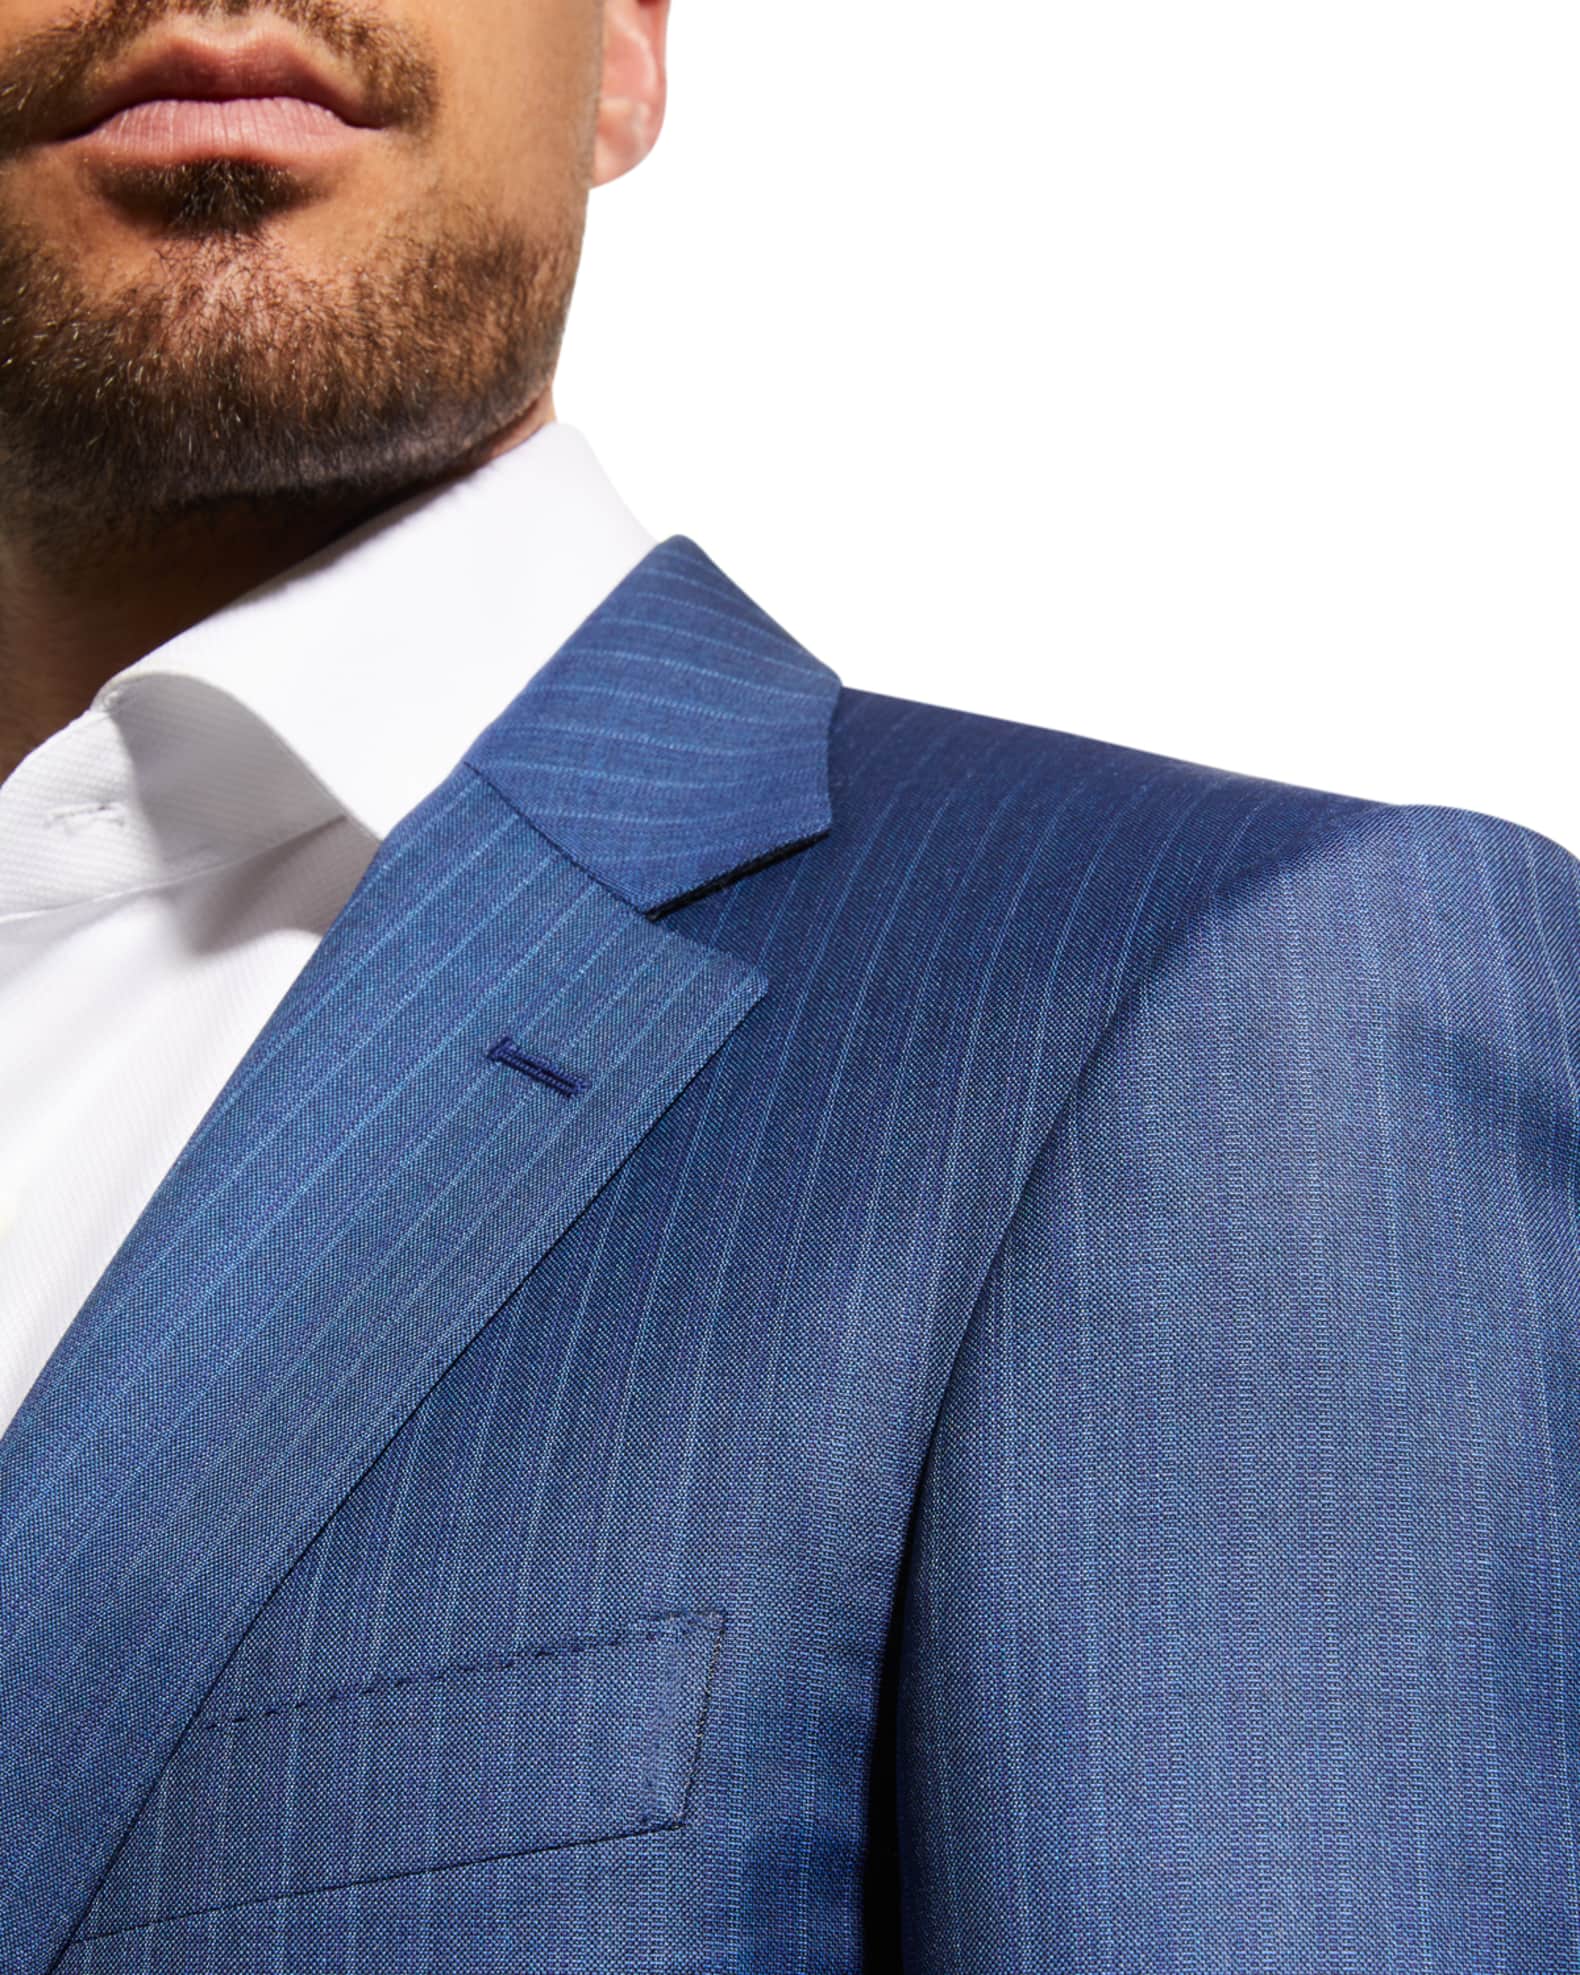 Canali Men's Super 150s Wool Striped Suit | Neiman Marcus